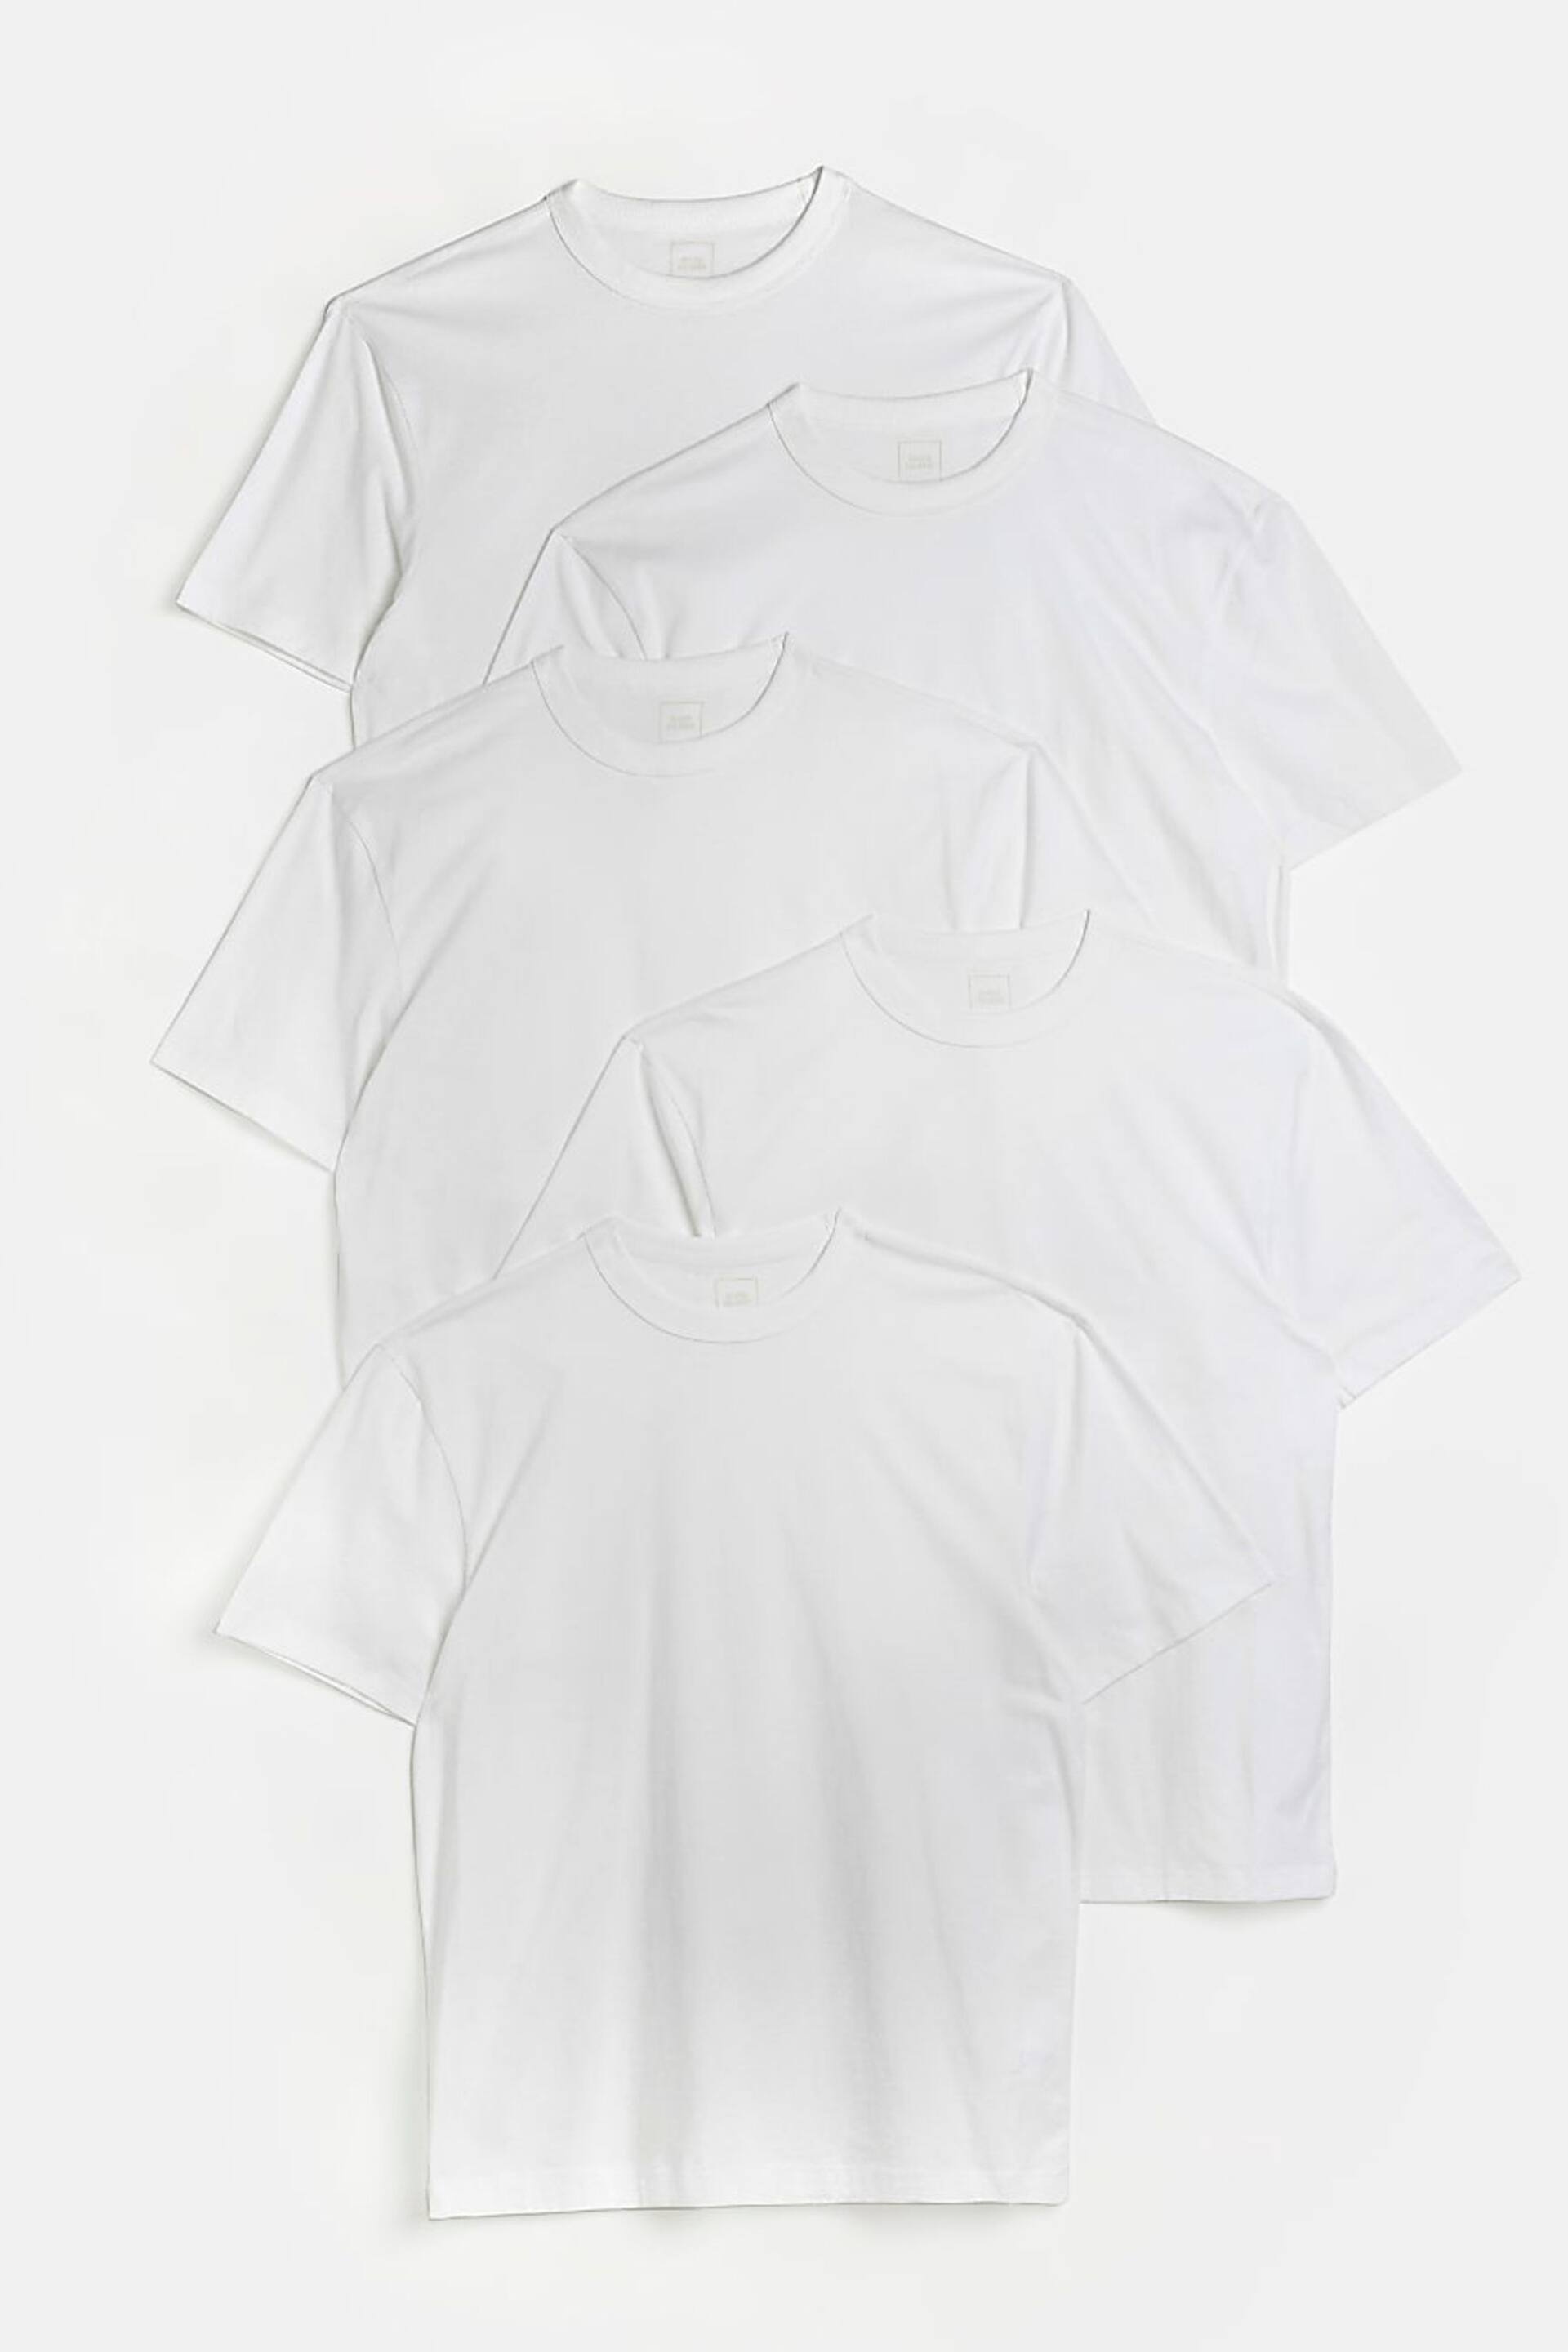 River Island White Regular T-Shirts 5 Pack - Image 1 of 6